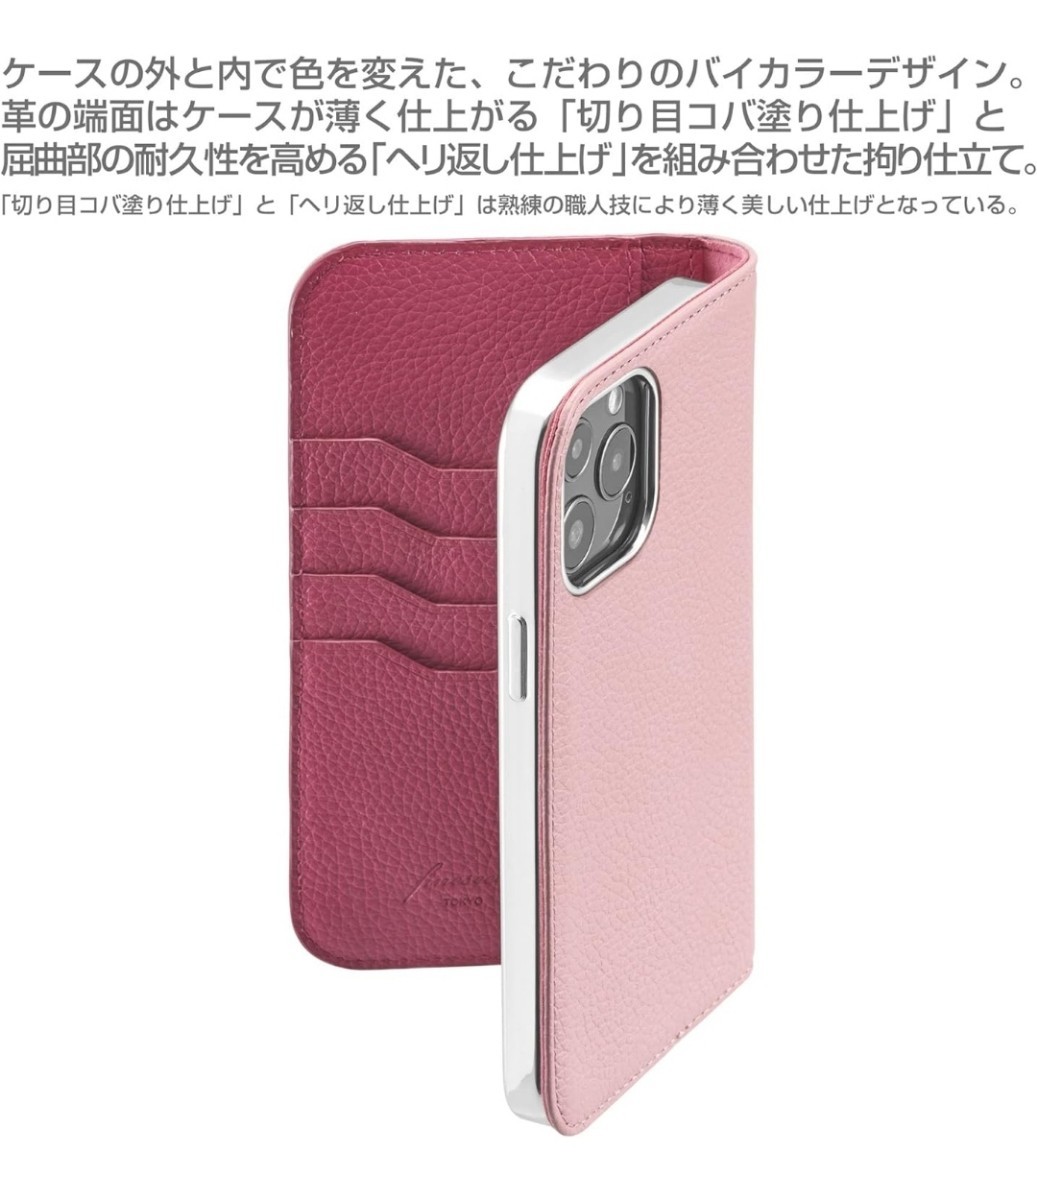 ER-79@ハクバ HAKUBA Fineseed iPhone13 Pro Max 専用 手帳型ケース ピンク PC-GLCIP13PMPK 6.7インチ対応 高級牛革製 スマホカバー _画像5